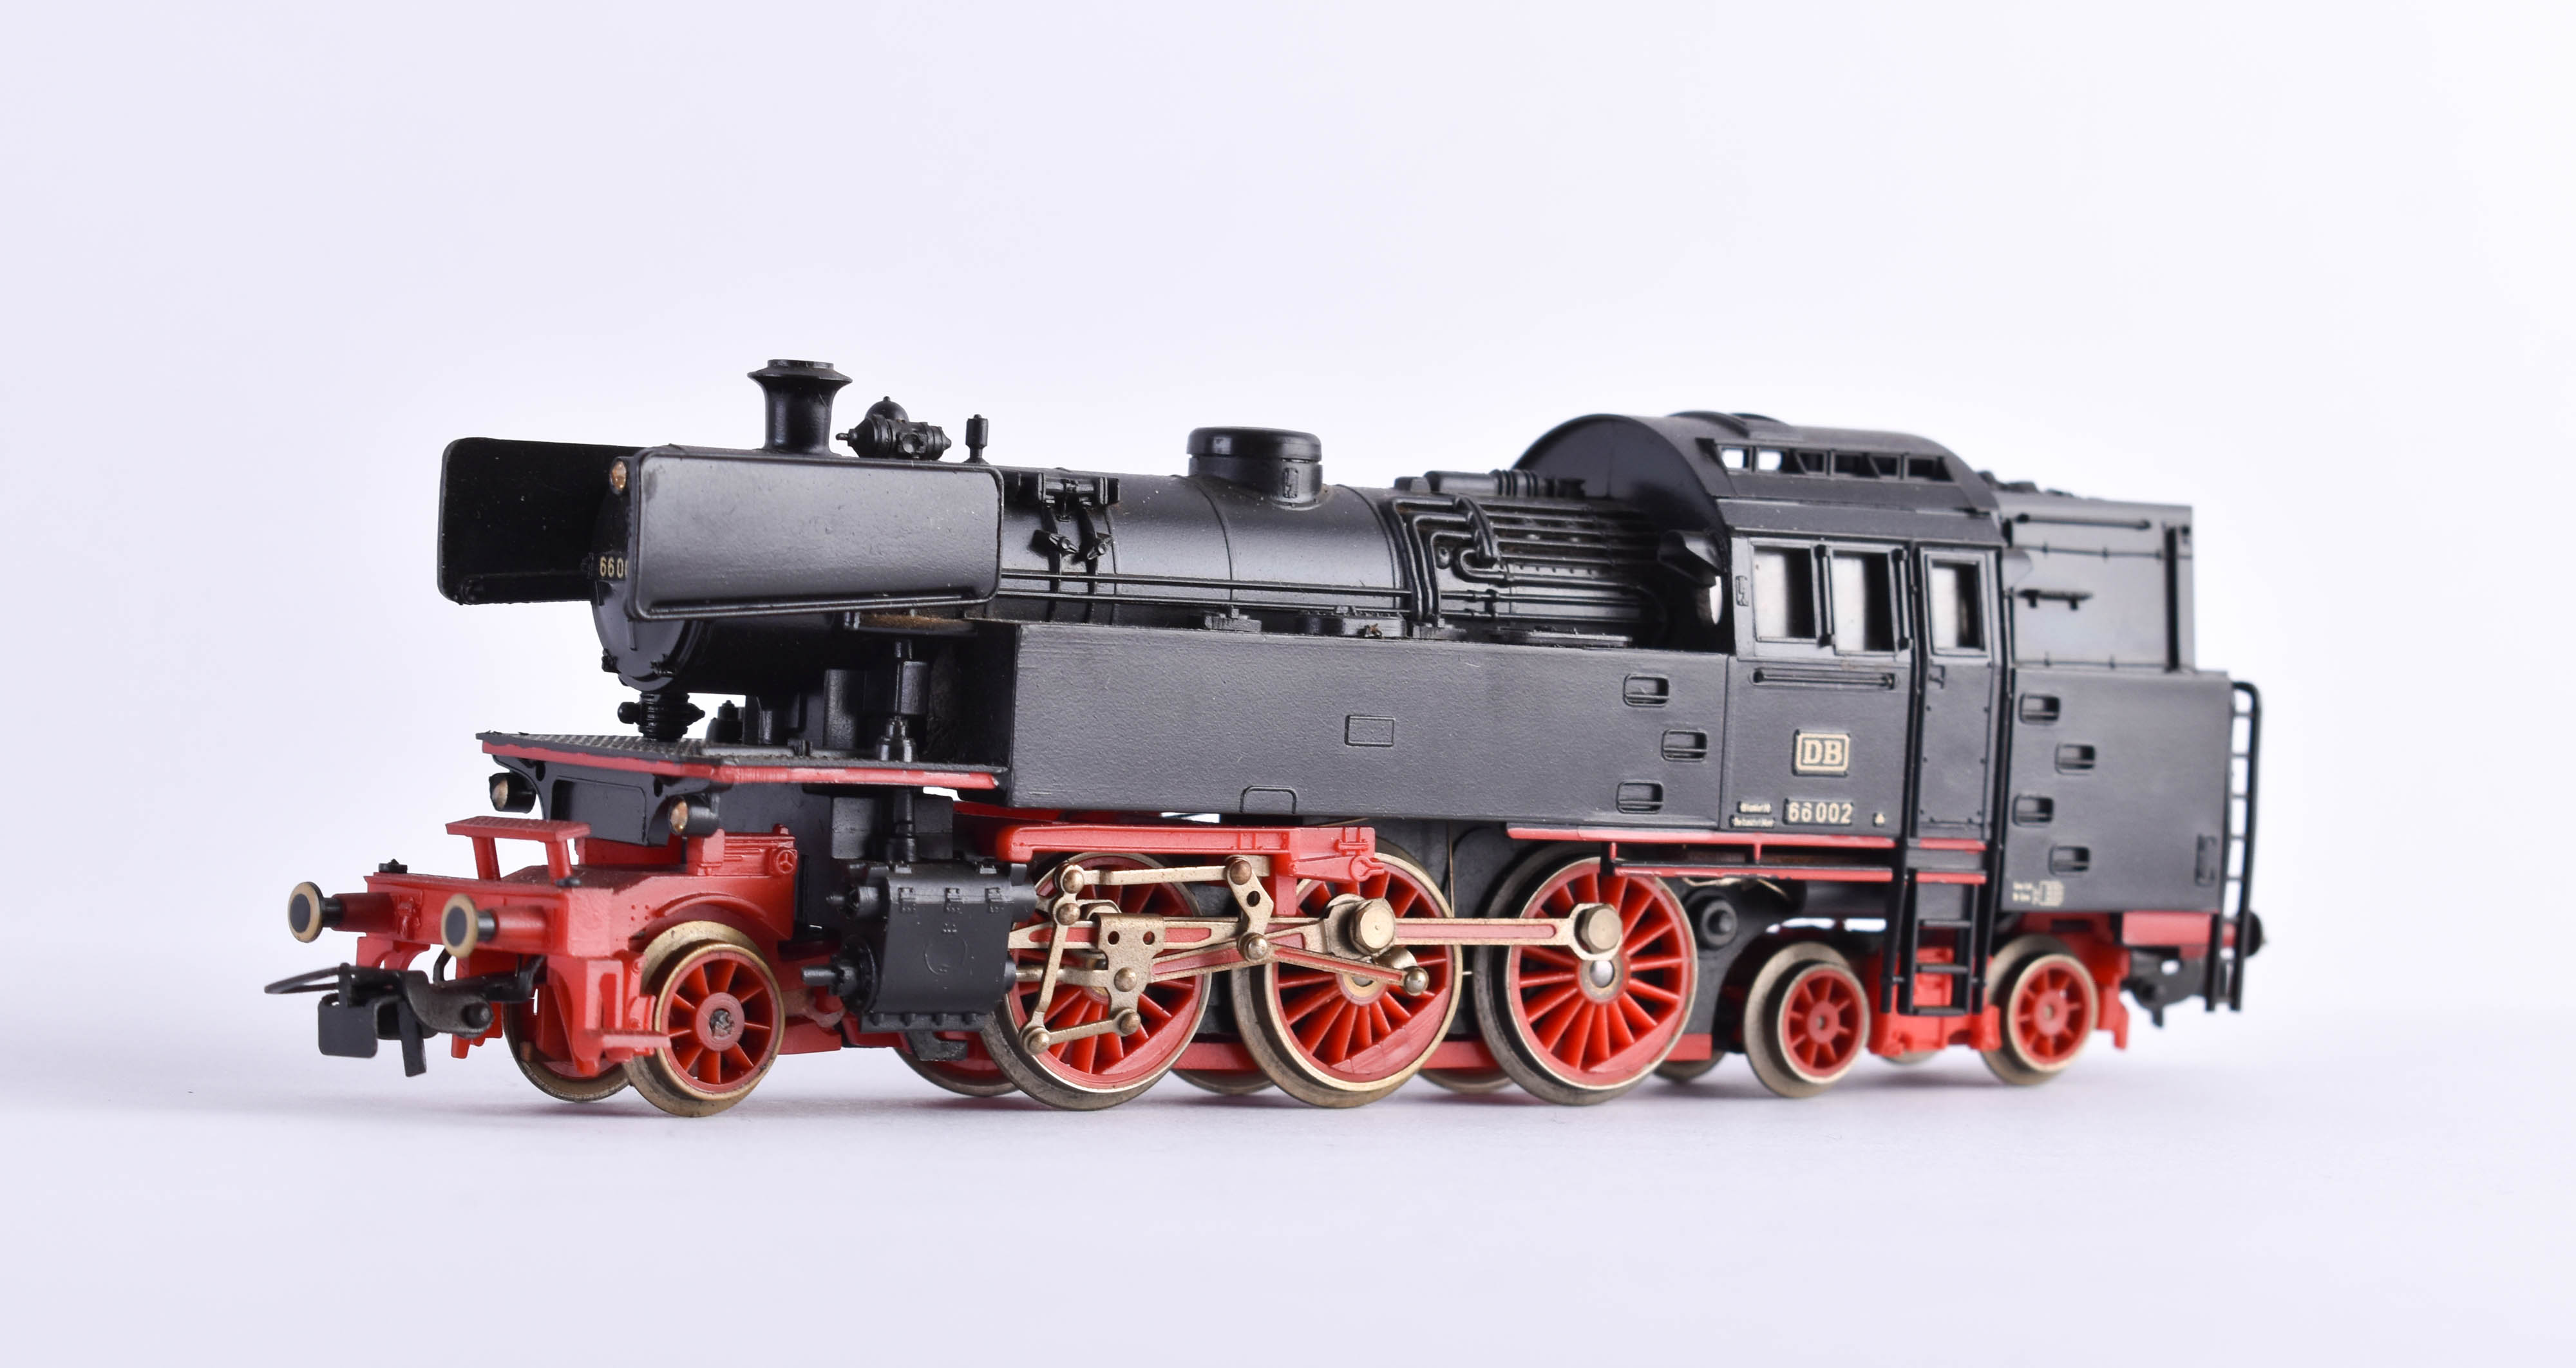 Tender steam locomotive width 66002 Piko - Image 2 of 3